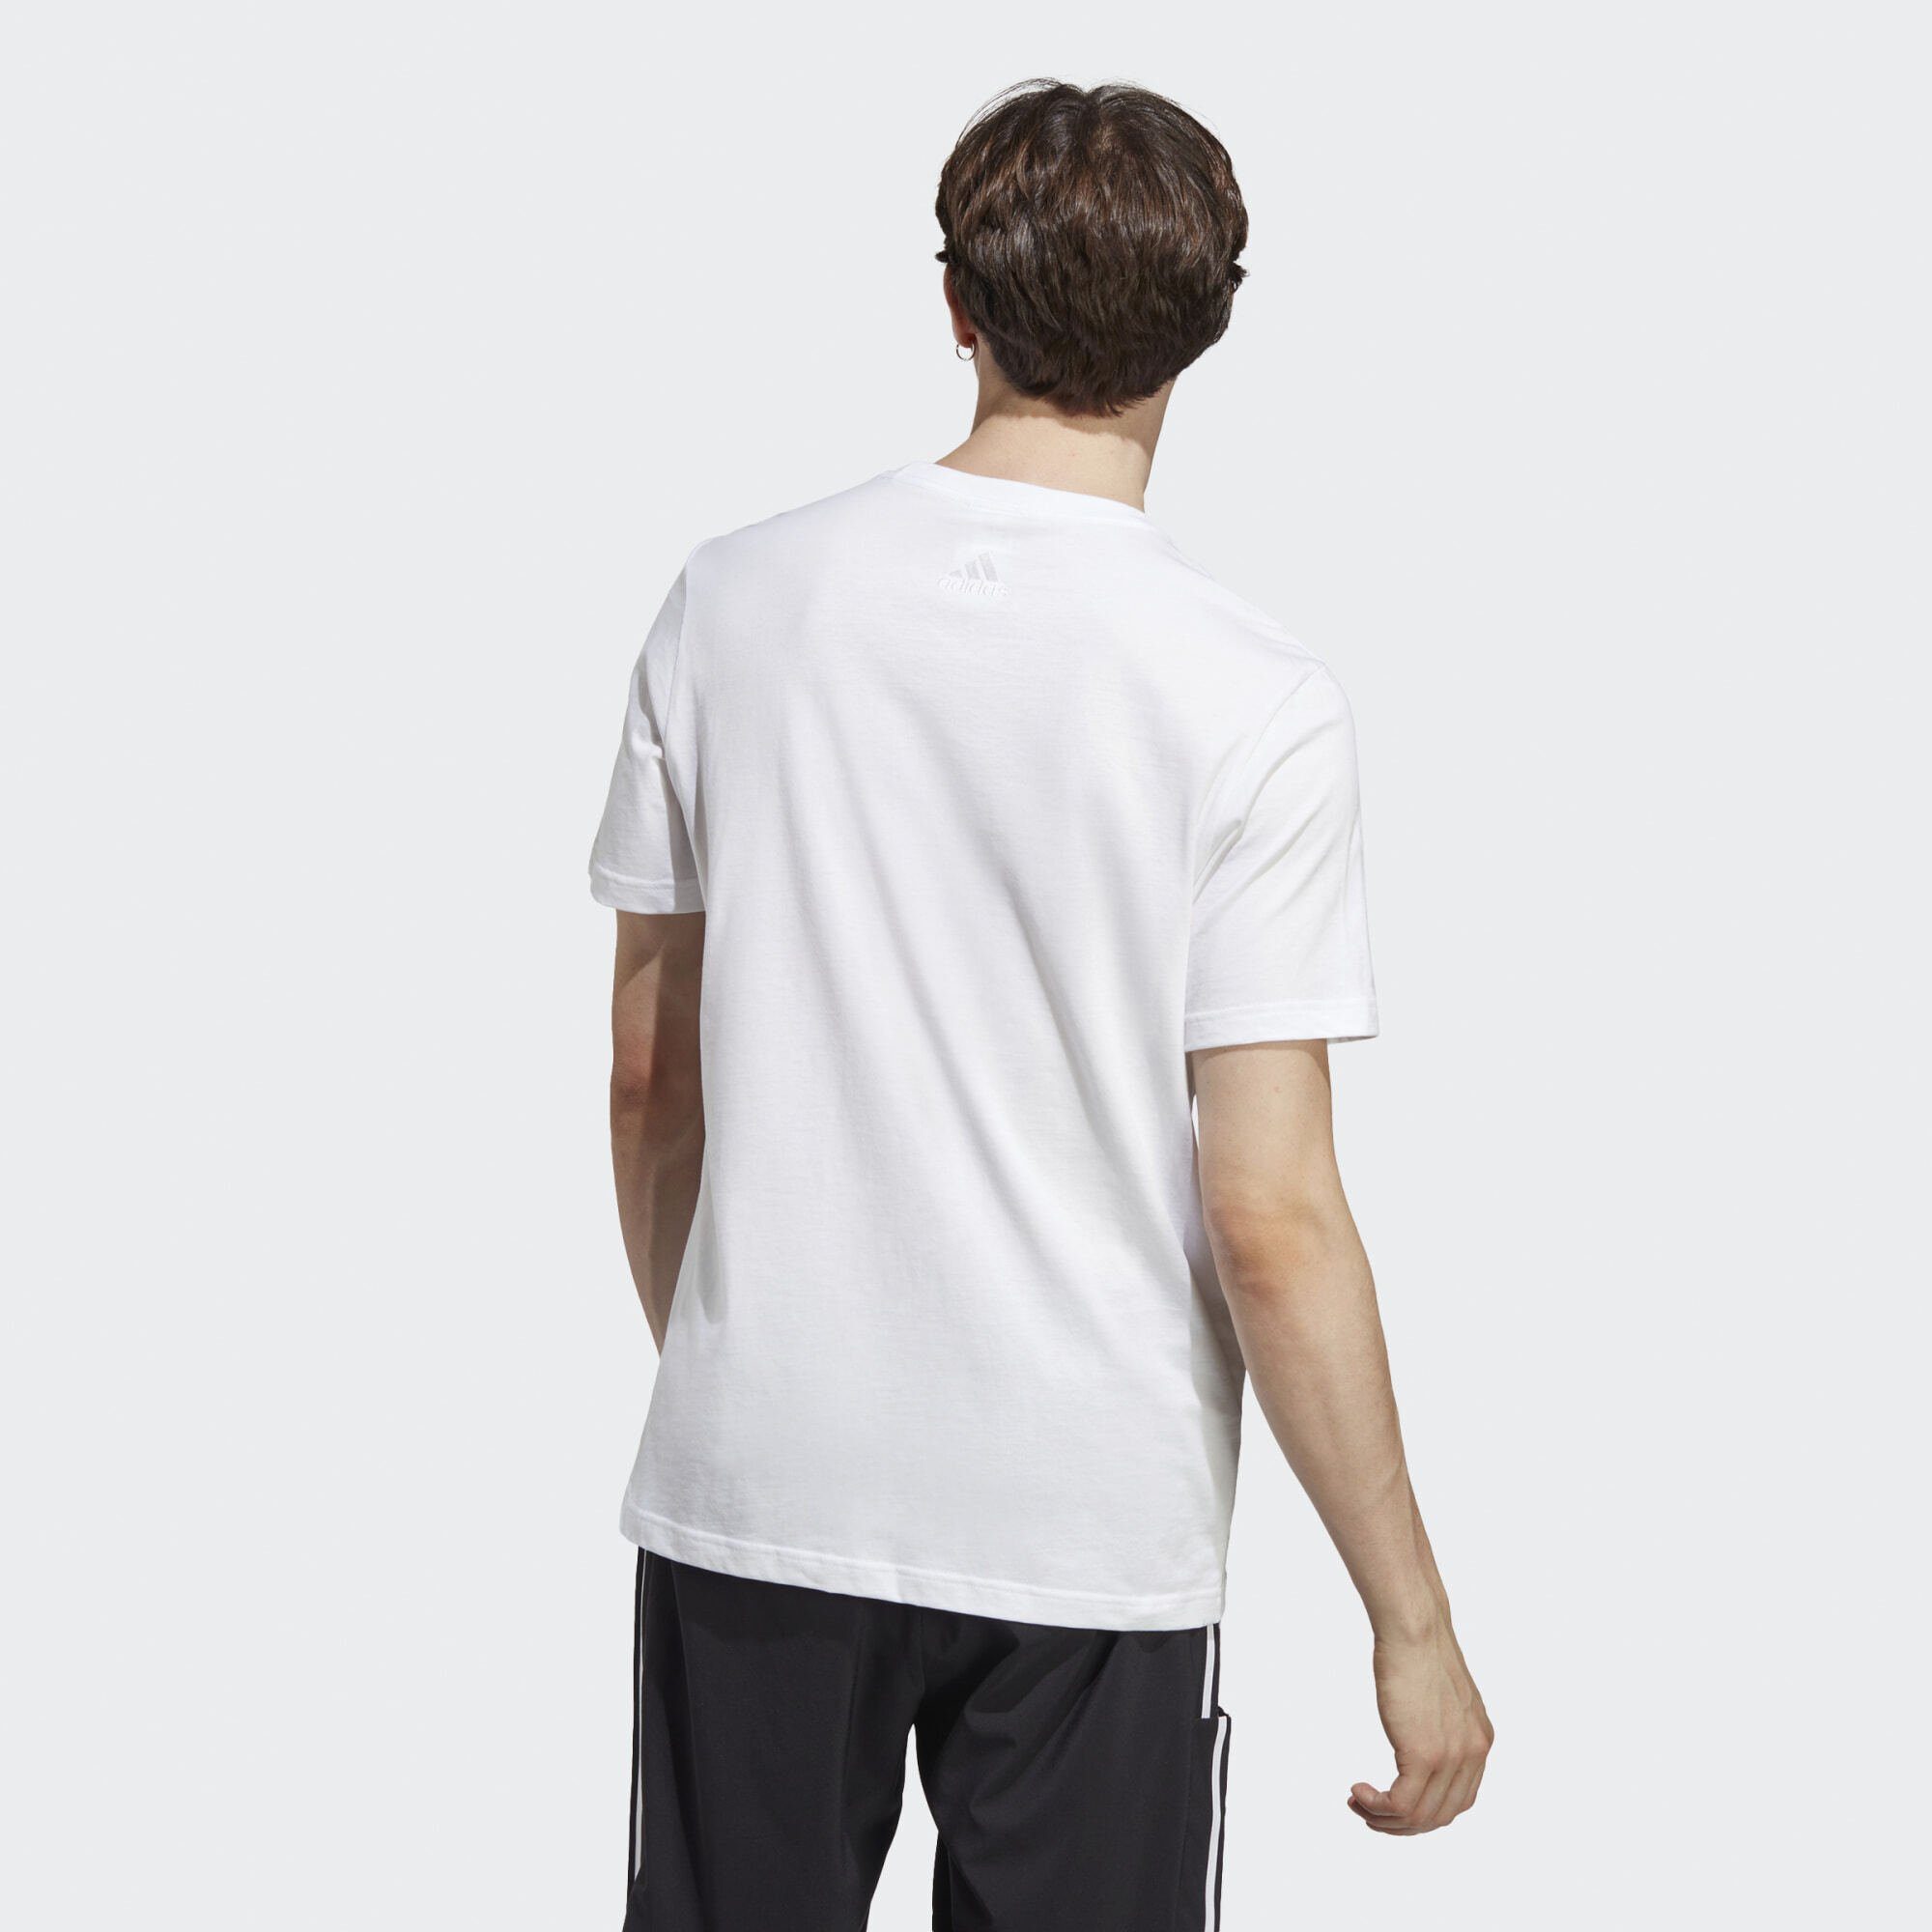 T-Shirt White Sportswear / adidas Black